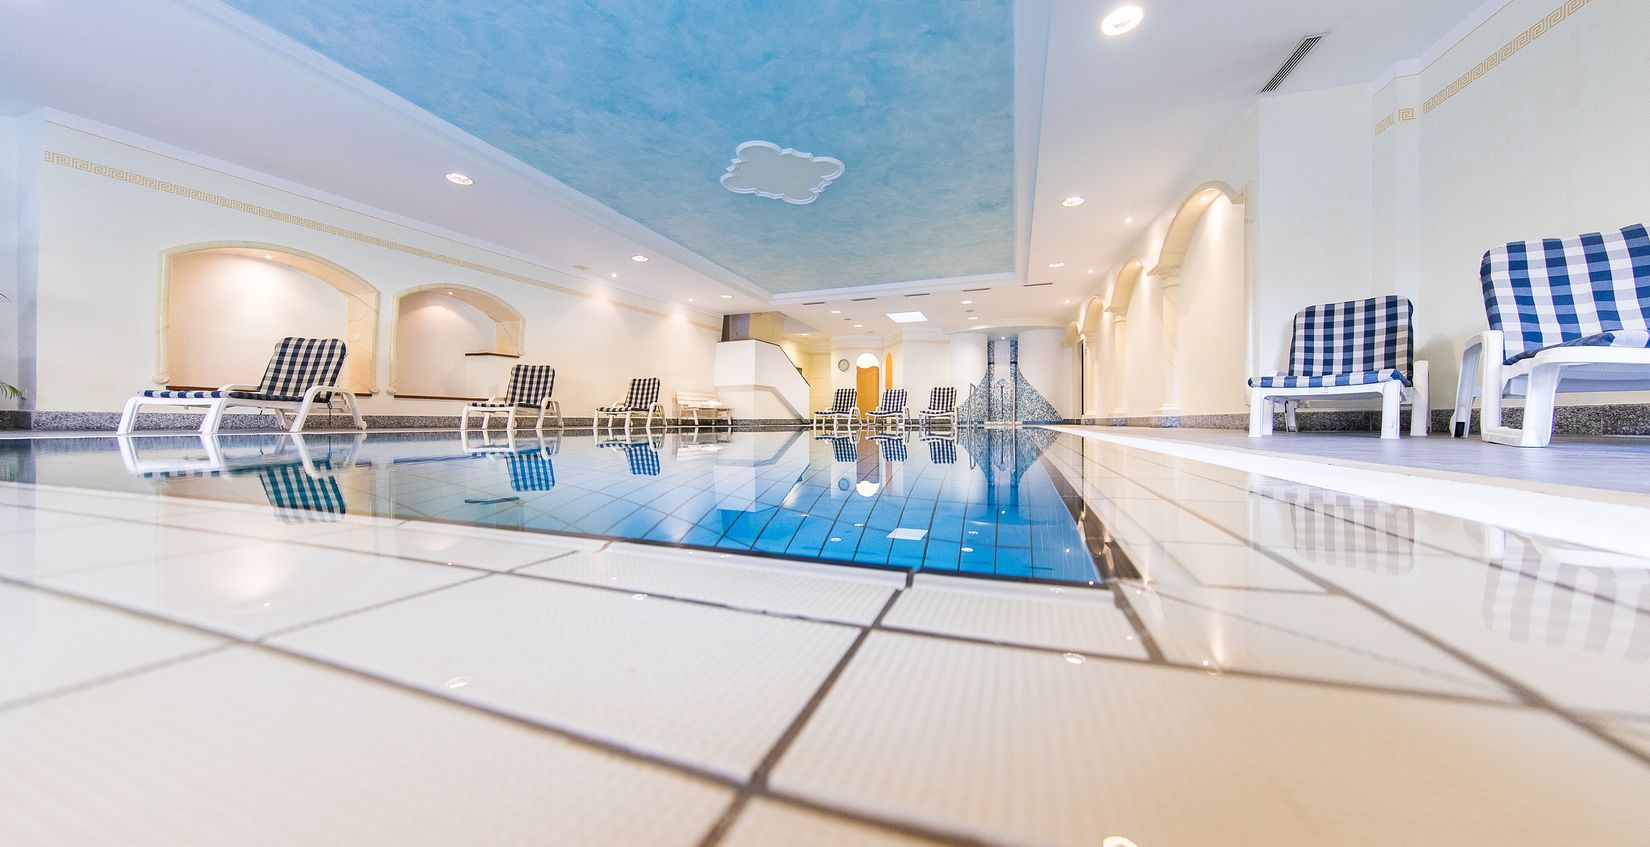 Indoor swimming pool Wellnesshotel South Tyrol, Hotel Winzerhof Tramin